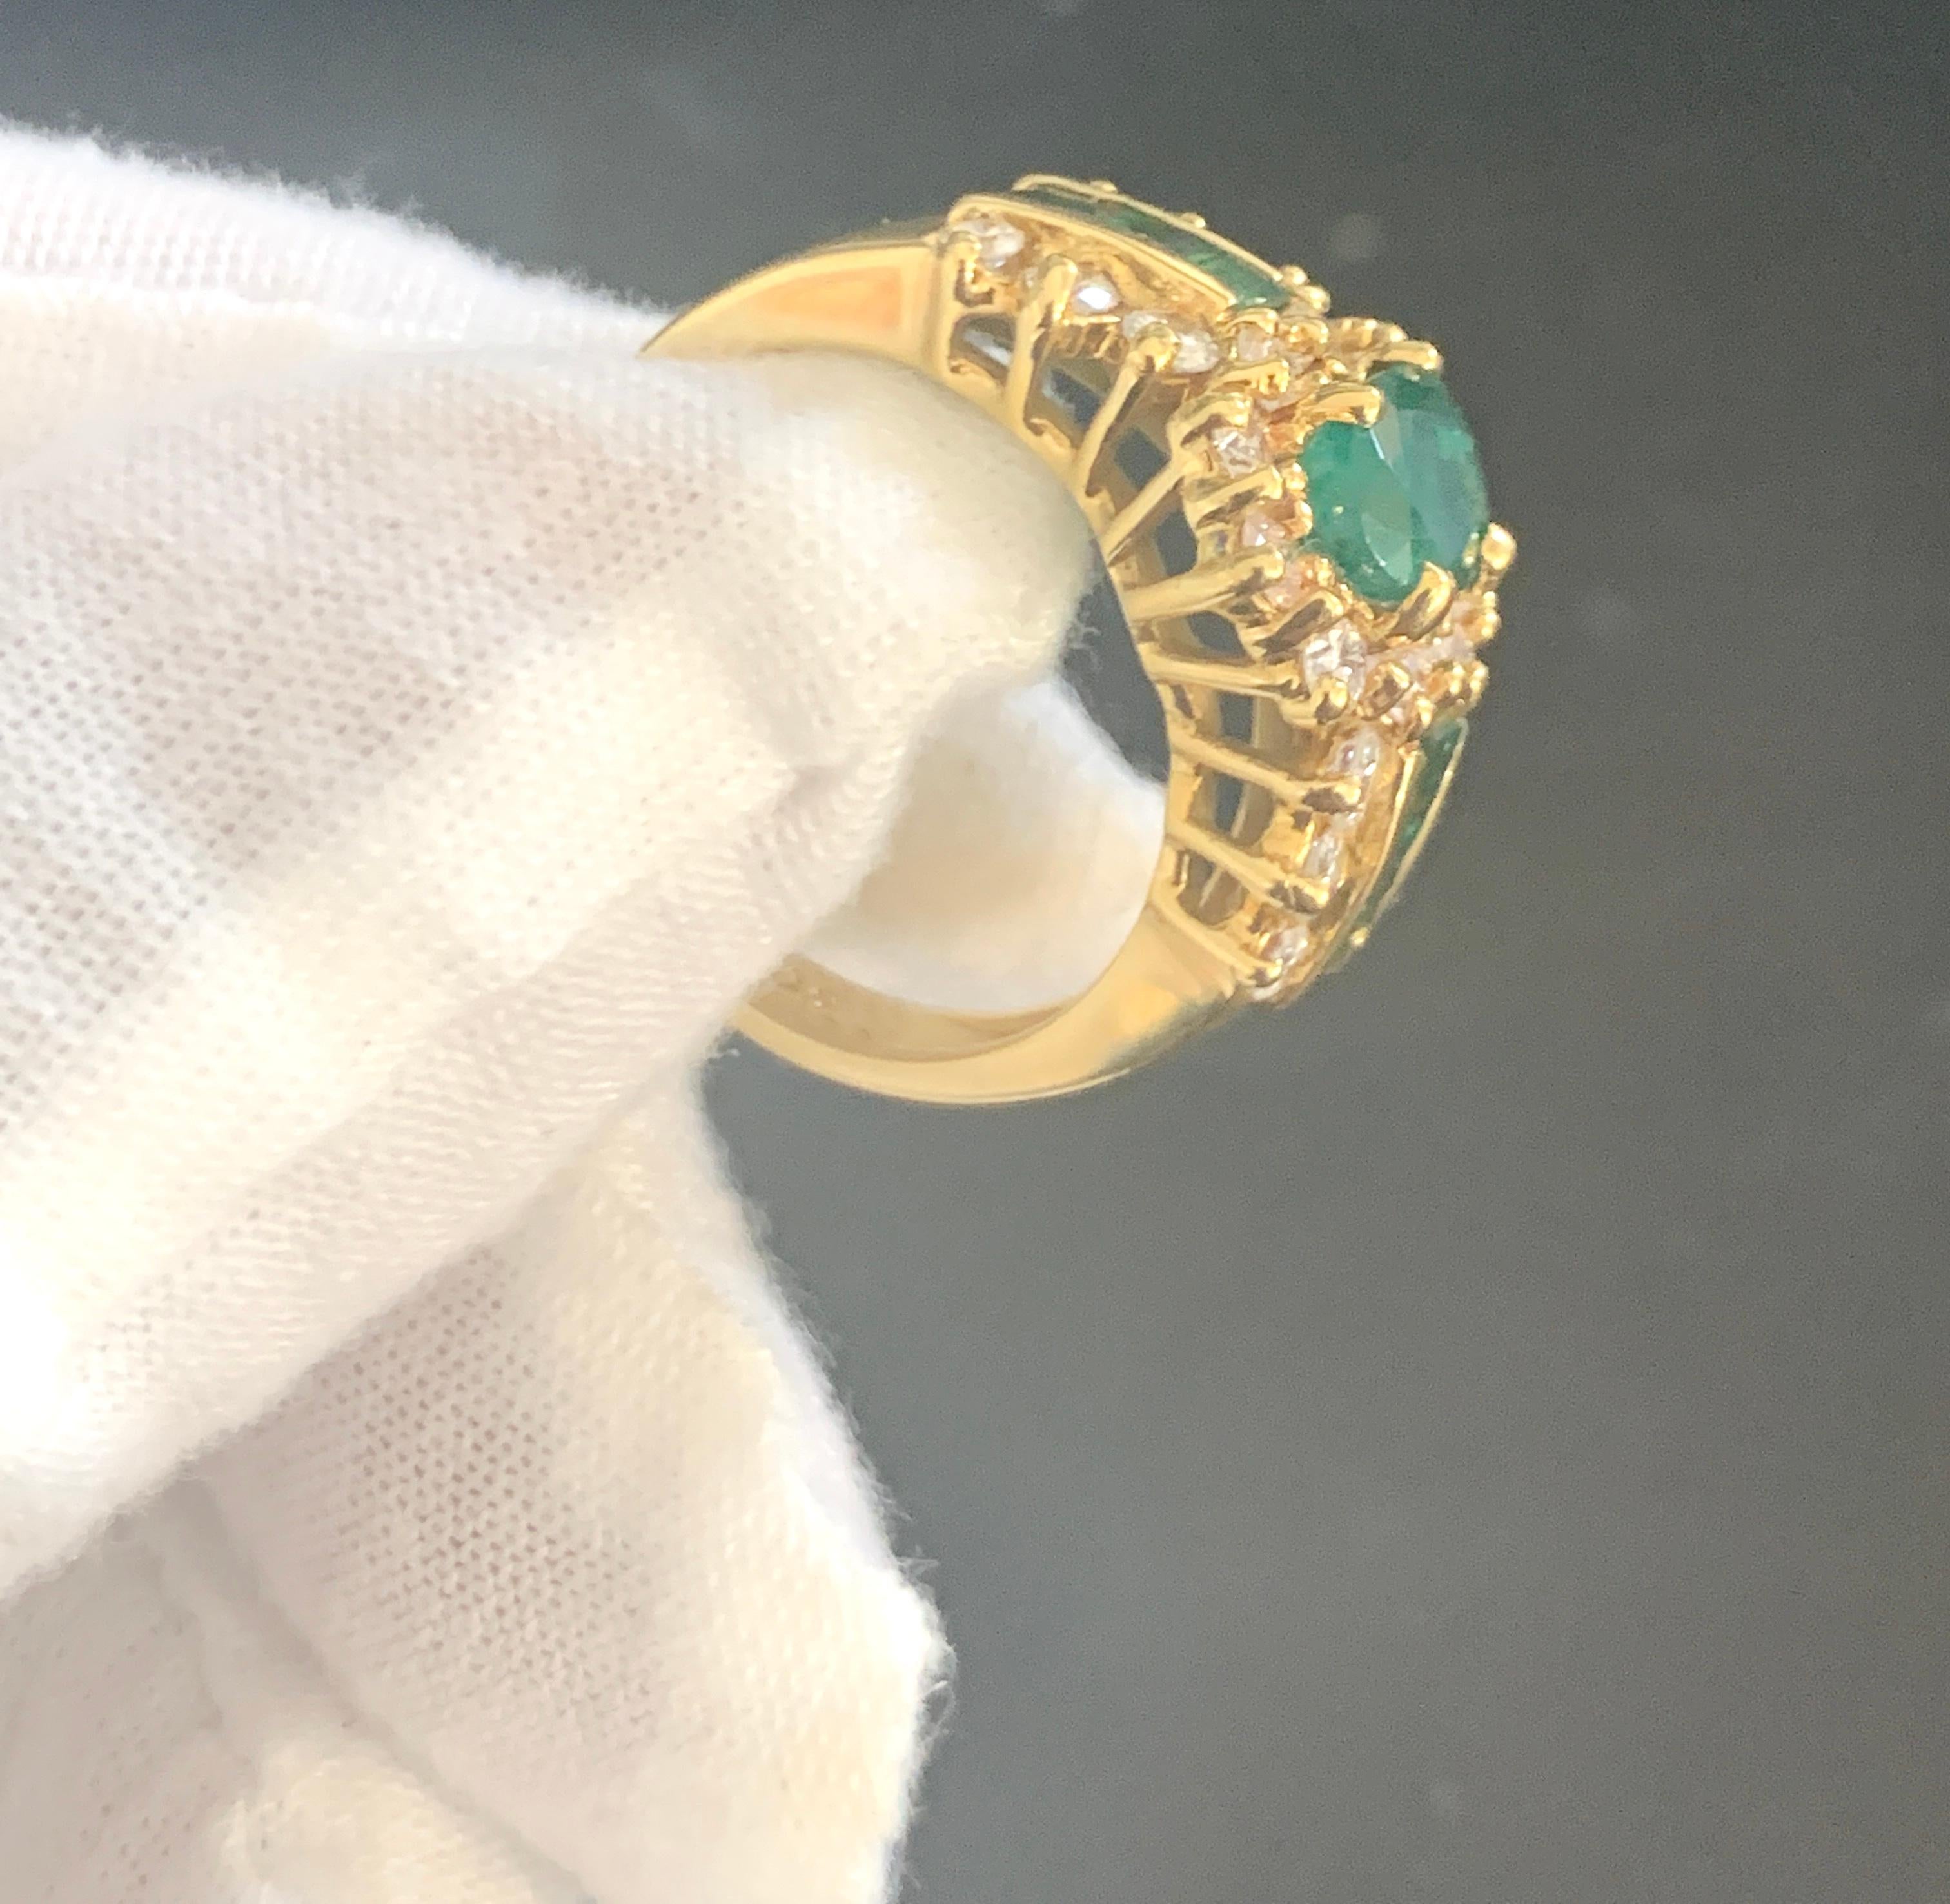 1 Carat Oval Cut Emerald and 1.0 Carat Diamond Ring 18 Karat Yellow Gold For Sale 1